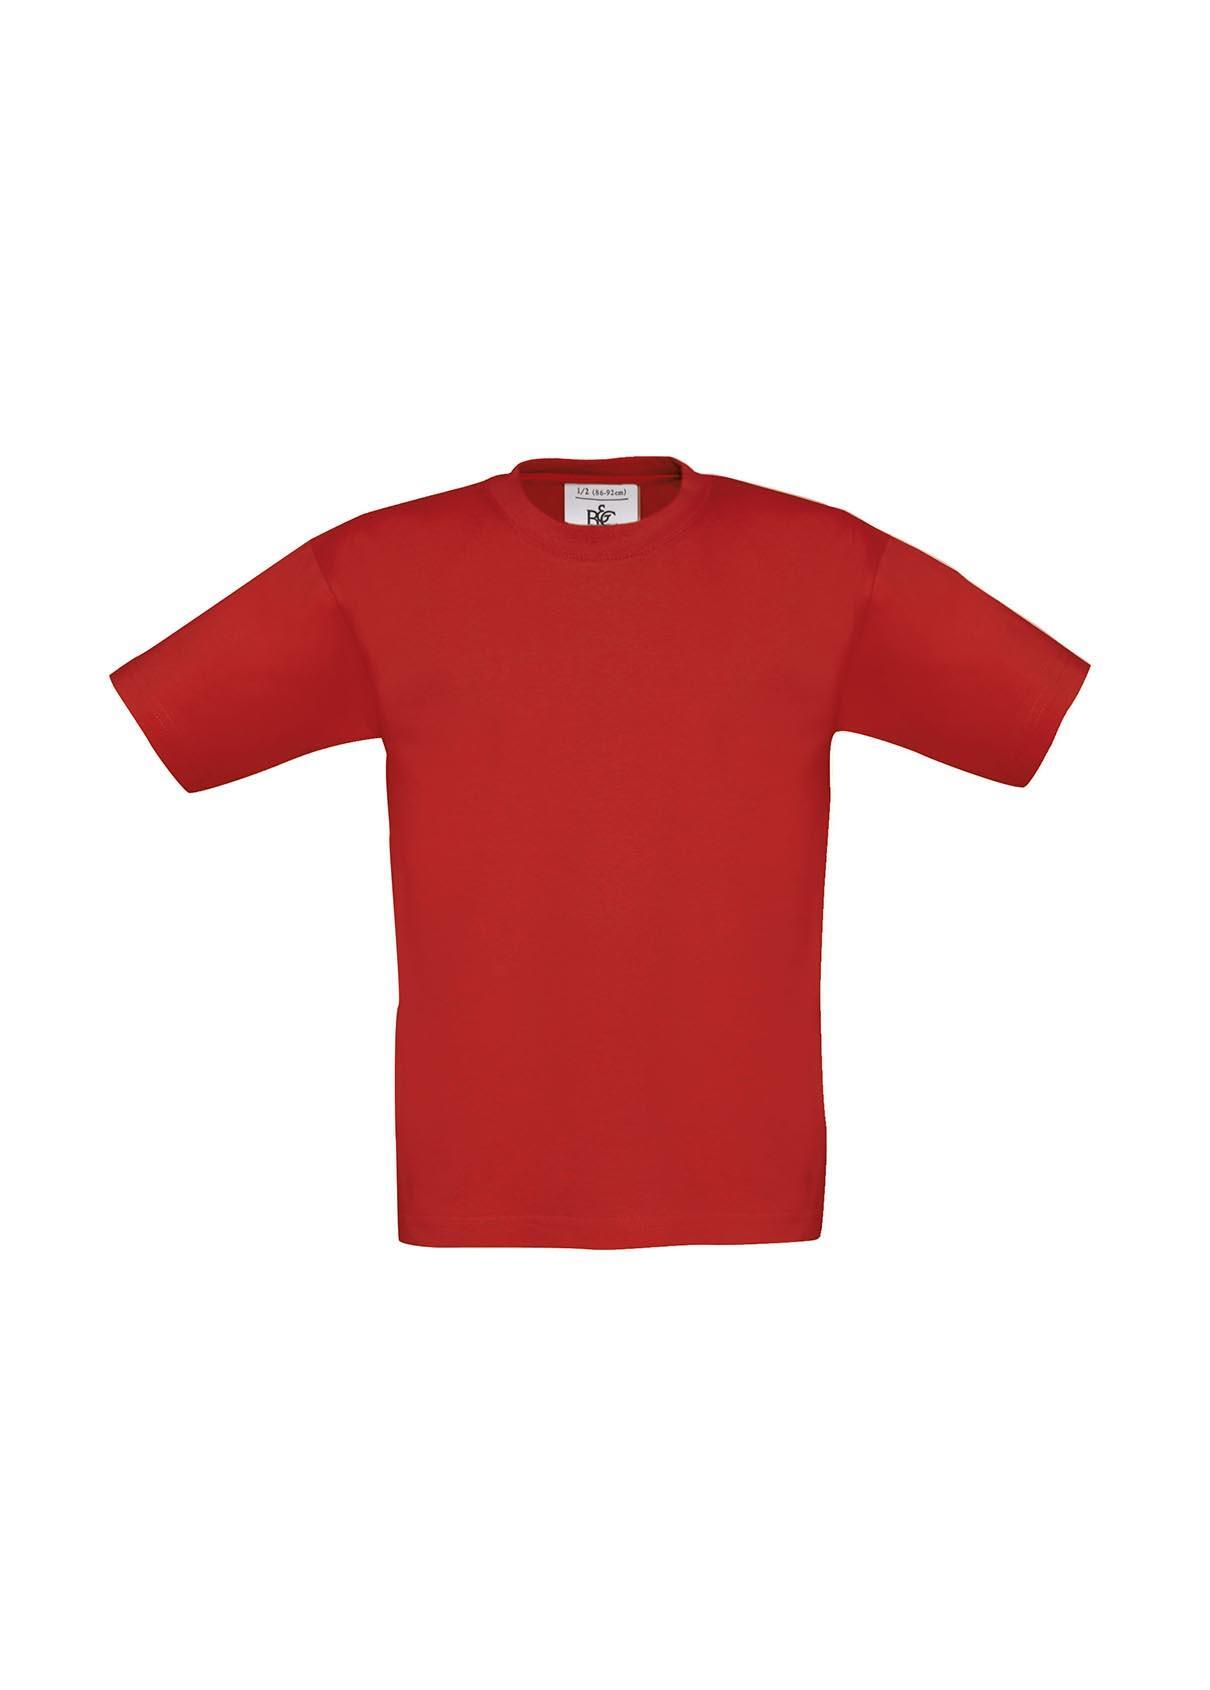 T-shirt voor kids rood kinder shirt